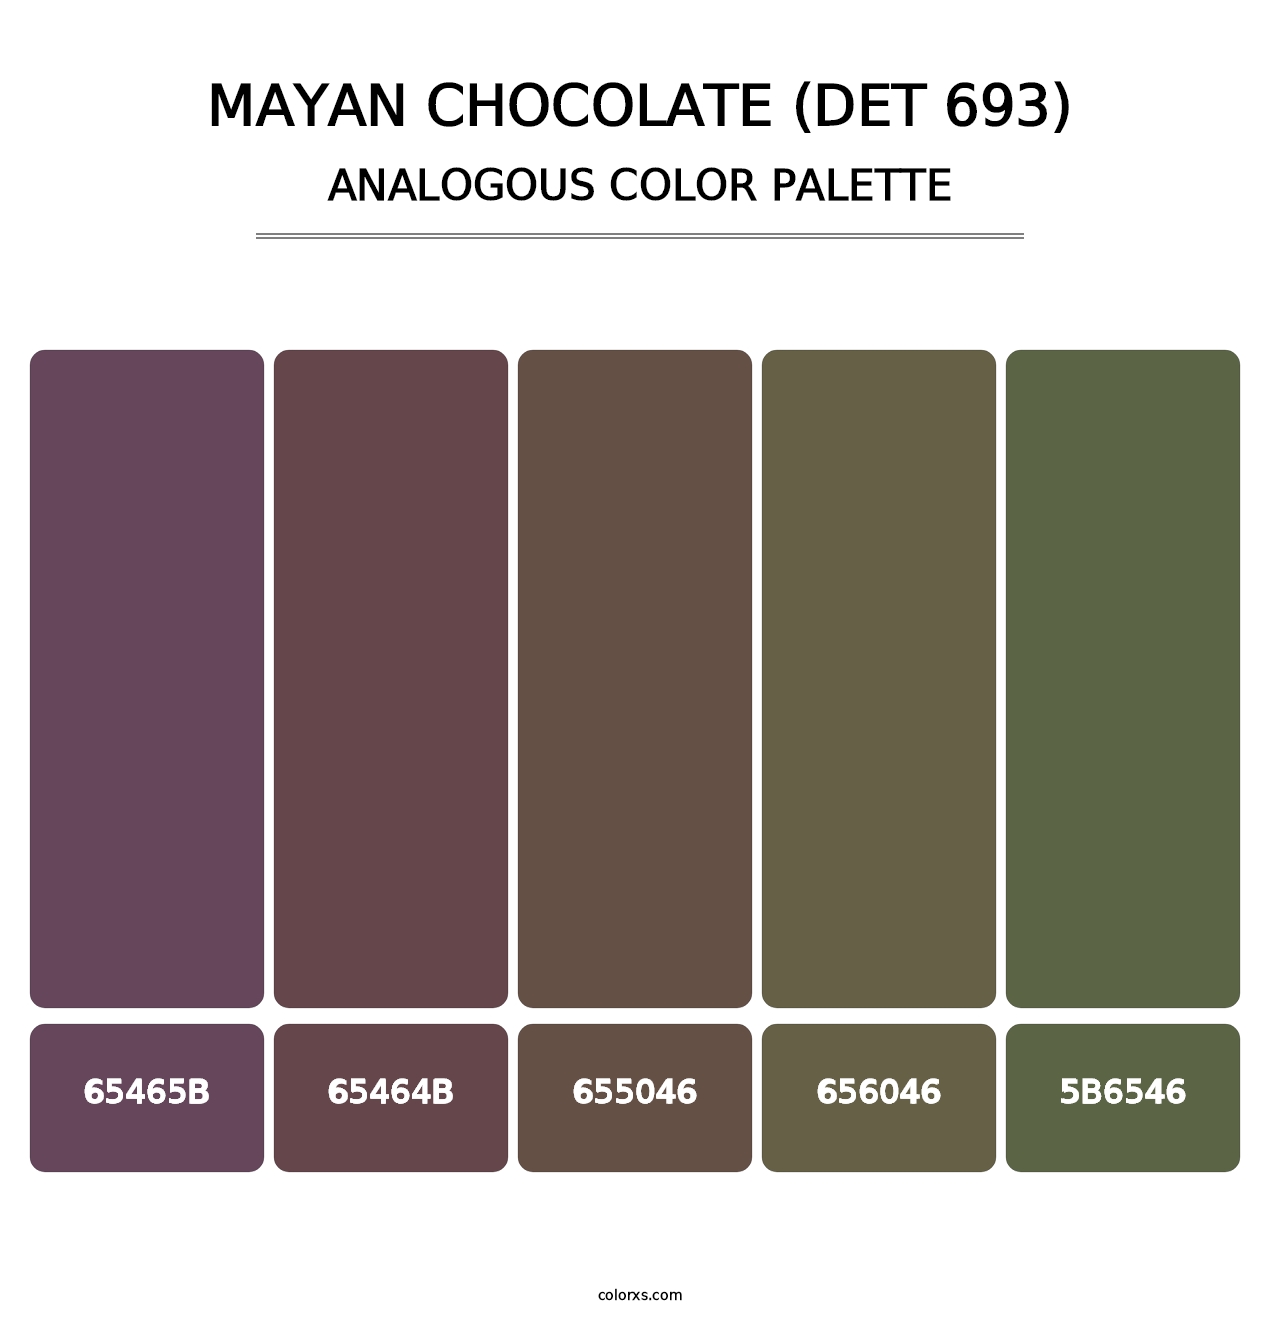 Mayan Chocolate (DET 693) - Analogous Color Palette